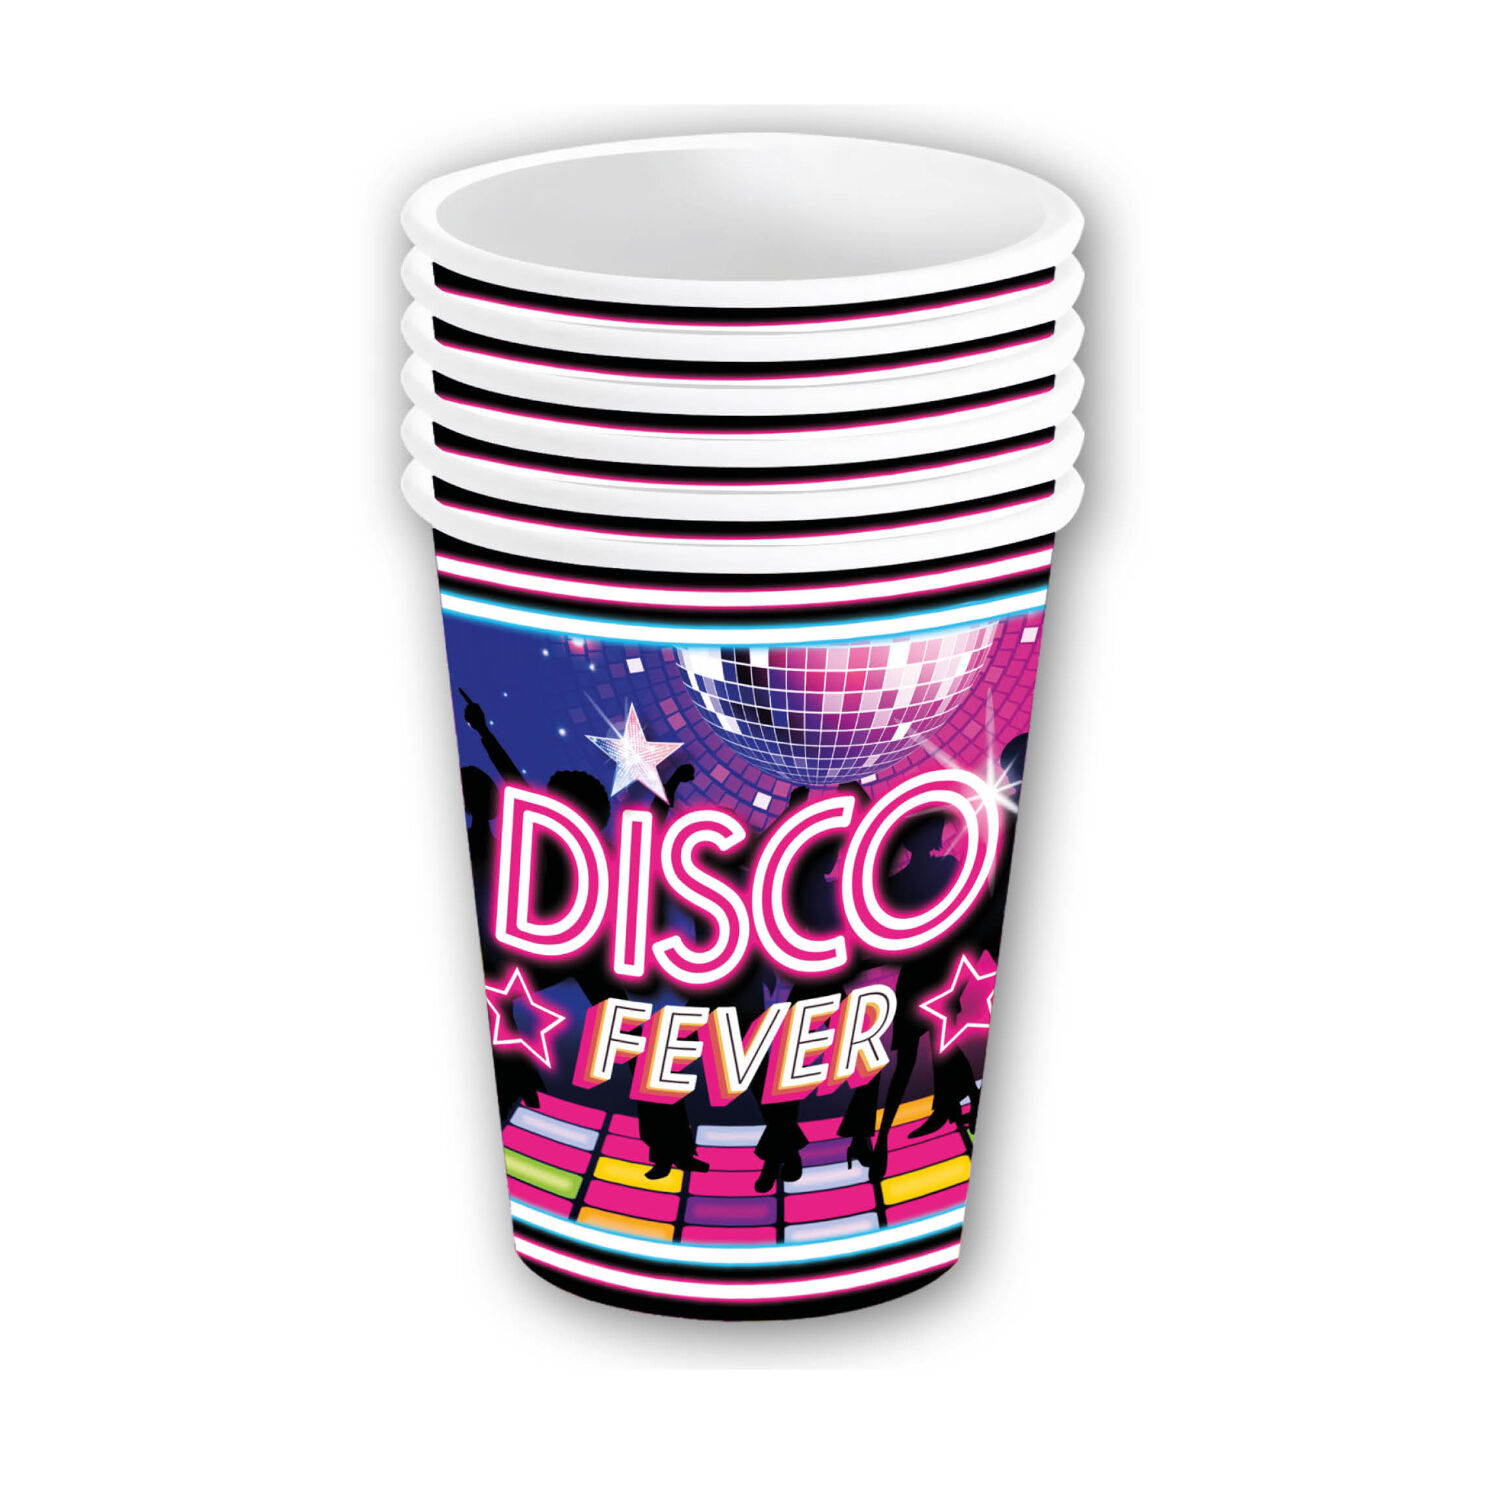 NEU Disco-Kugel gold, Ø20cm, mit Aufhänger - Disco-Party & 80er-Jahre-Party  Motto-Party Produkte 